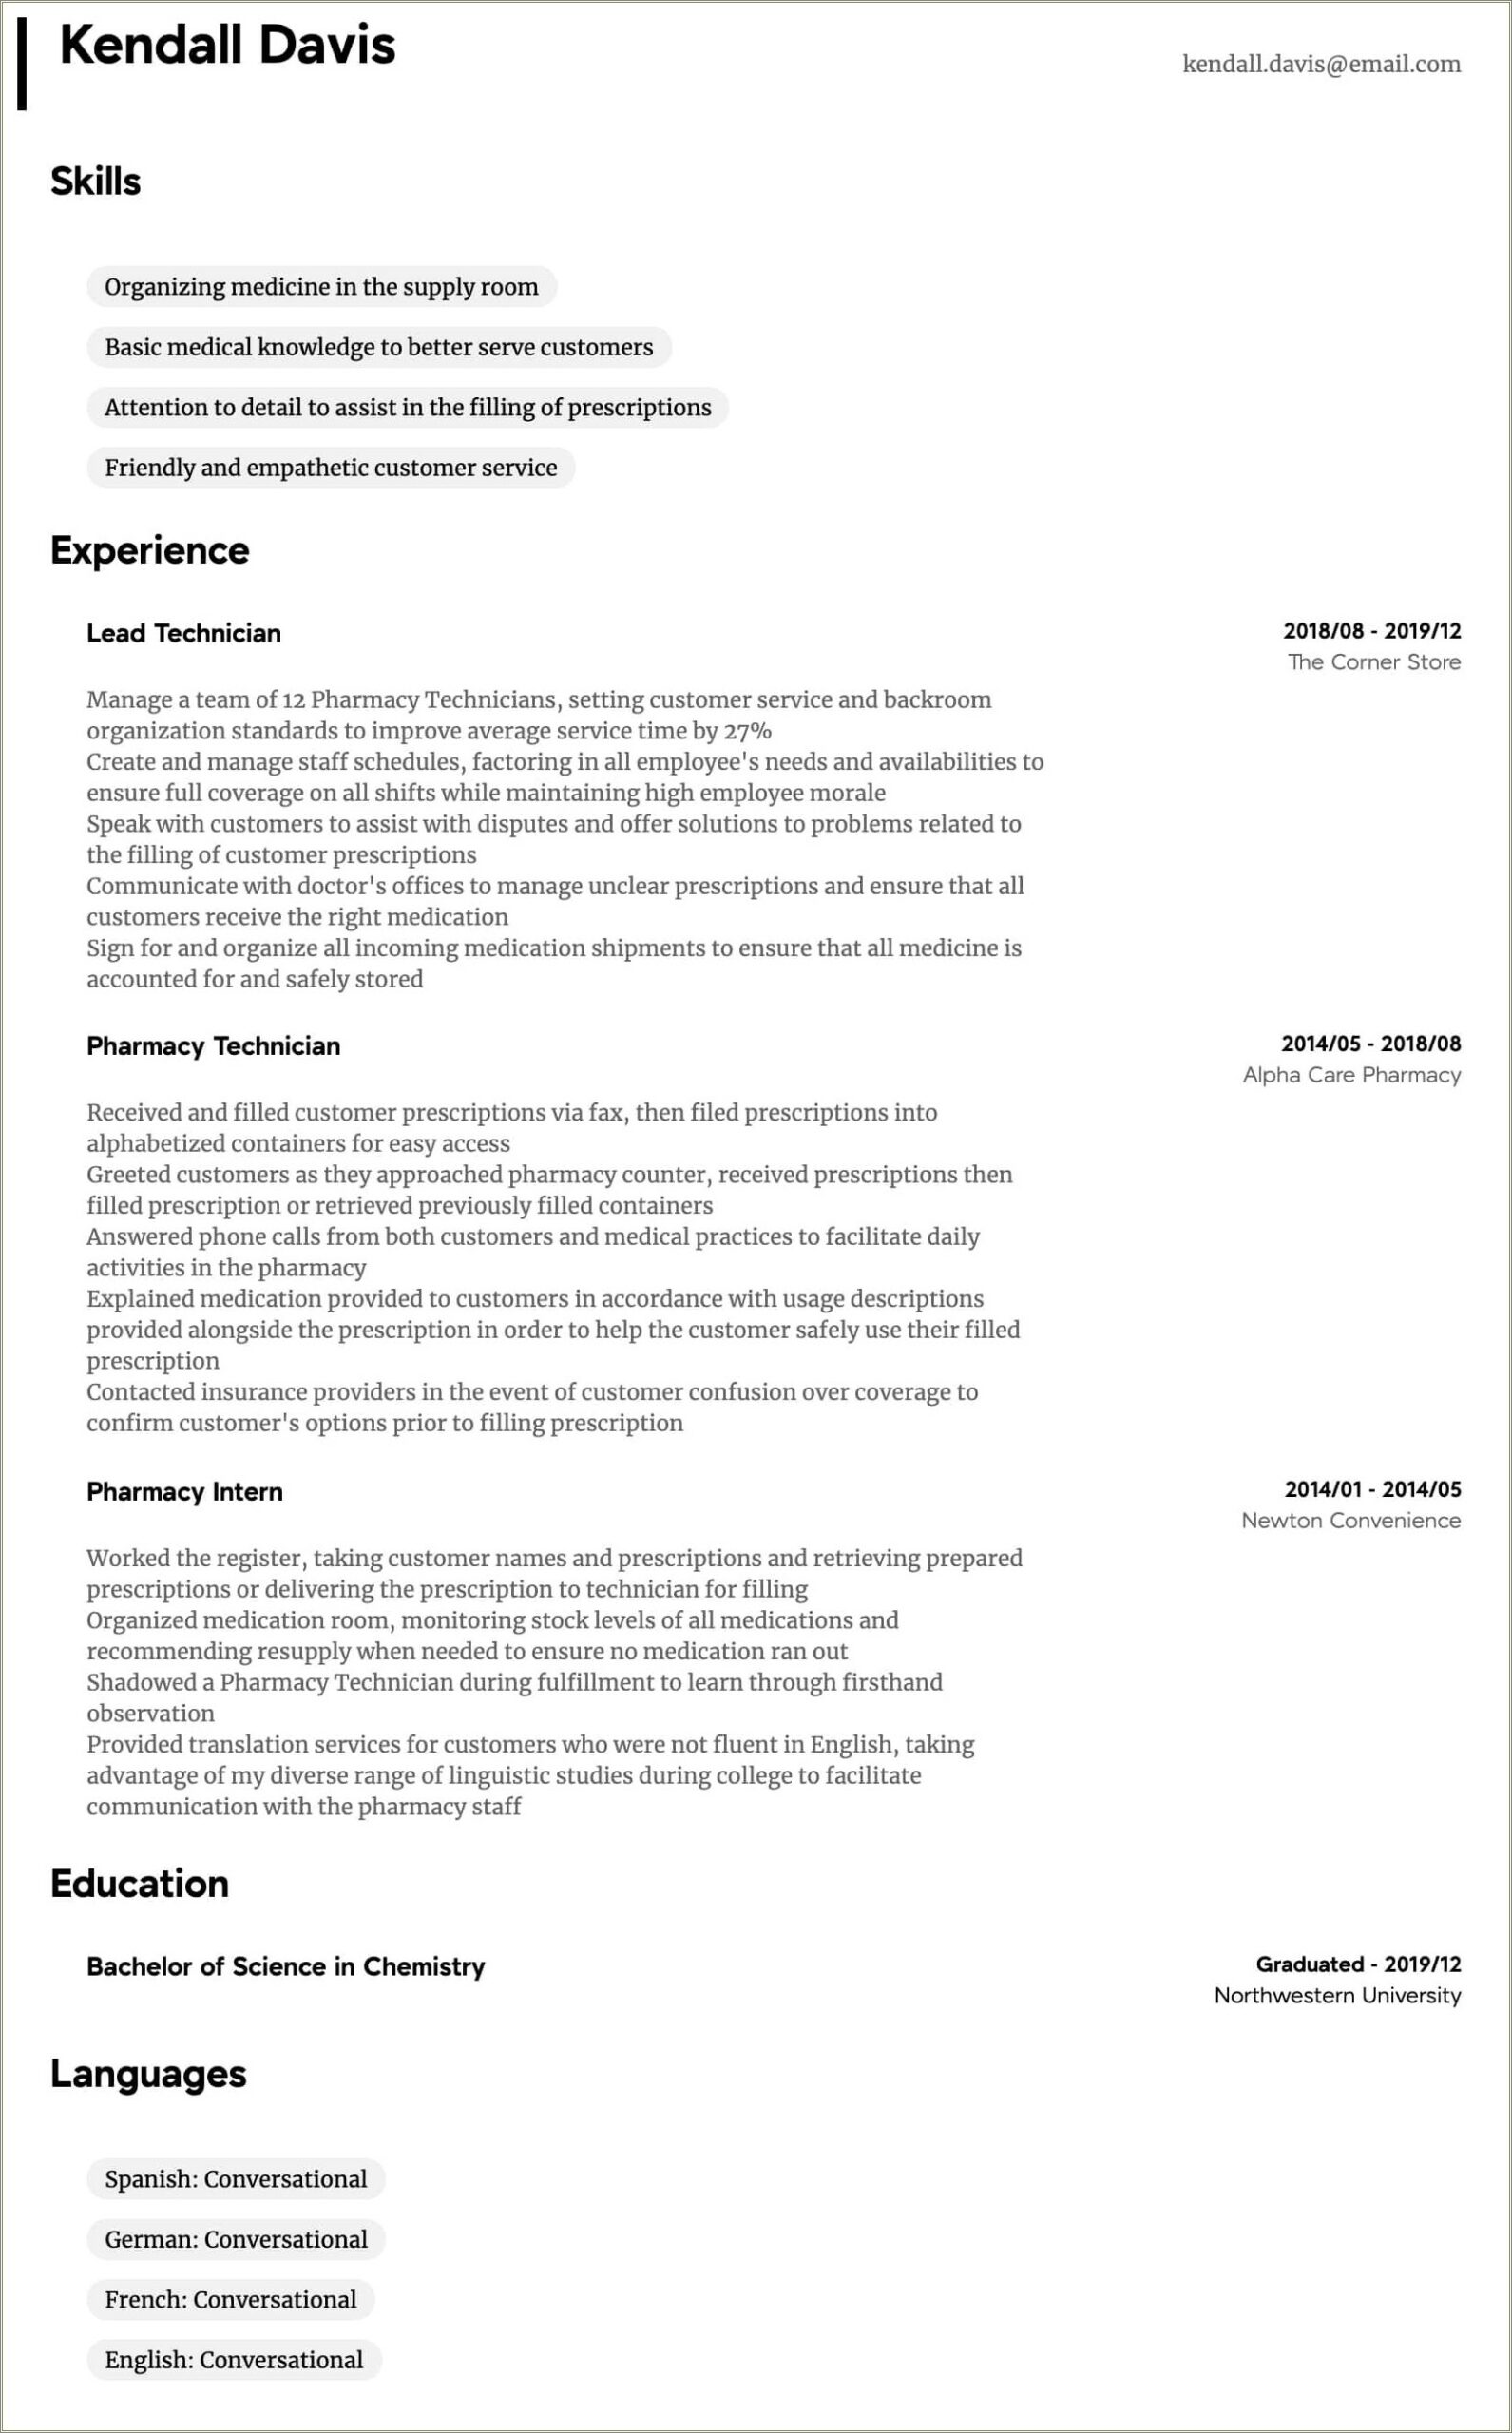 Sample Resume Of A Pharmacy Technician